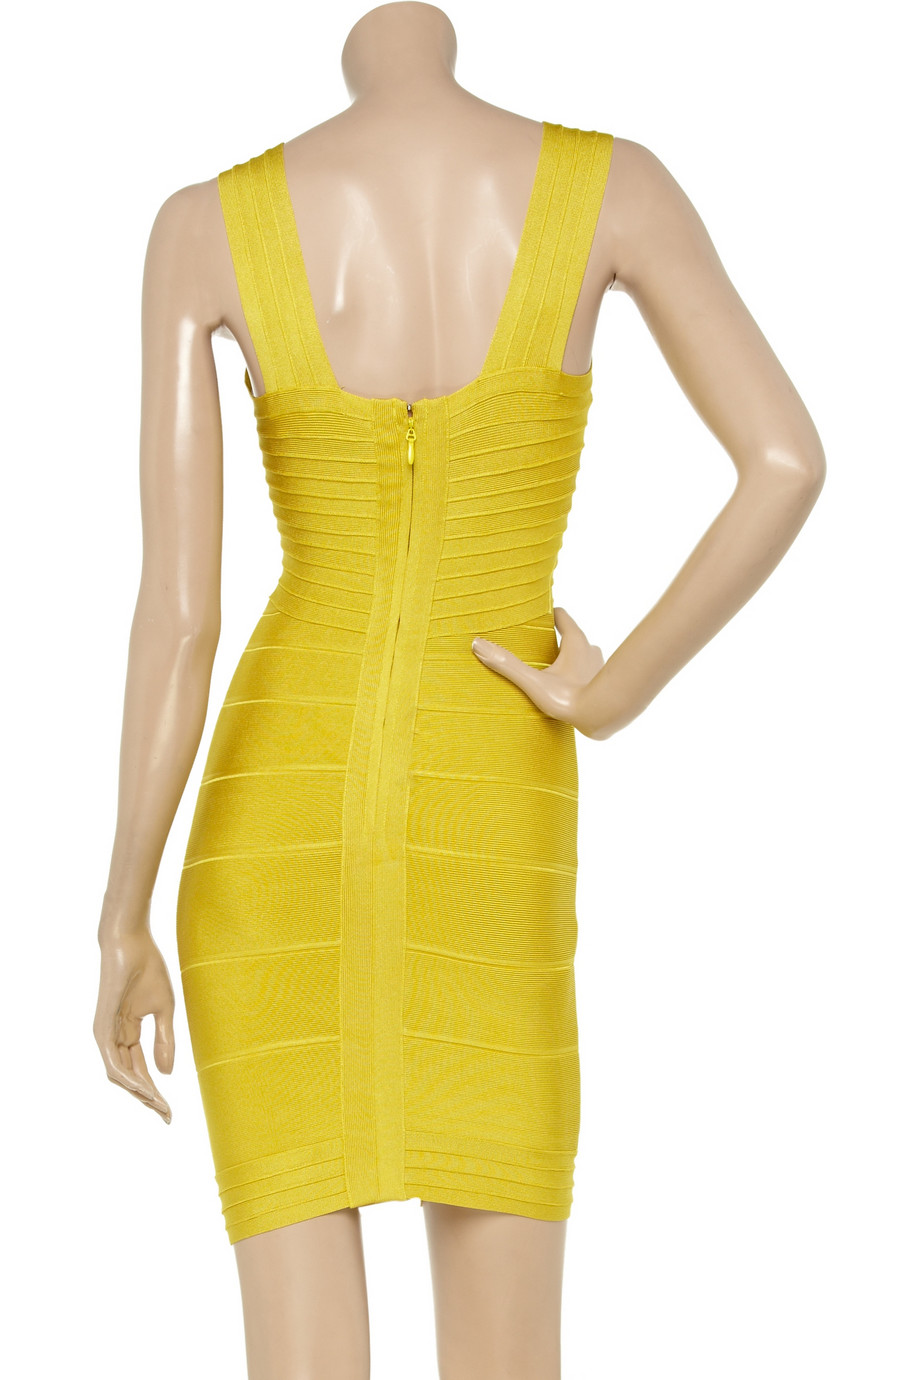 Lyst - Hervé léger Bandage Dress in Yellow